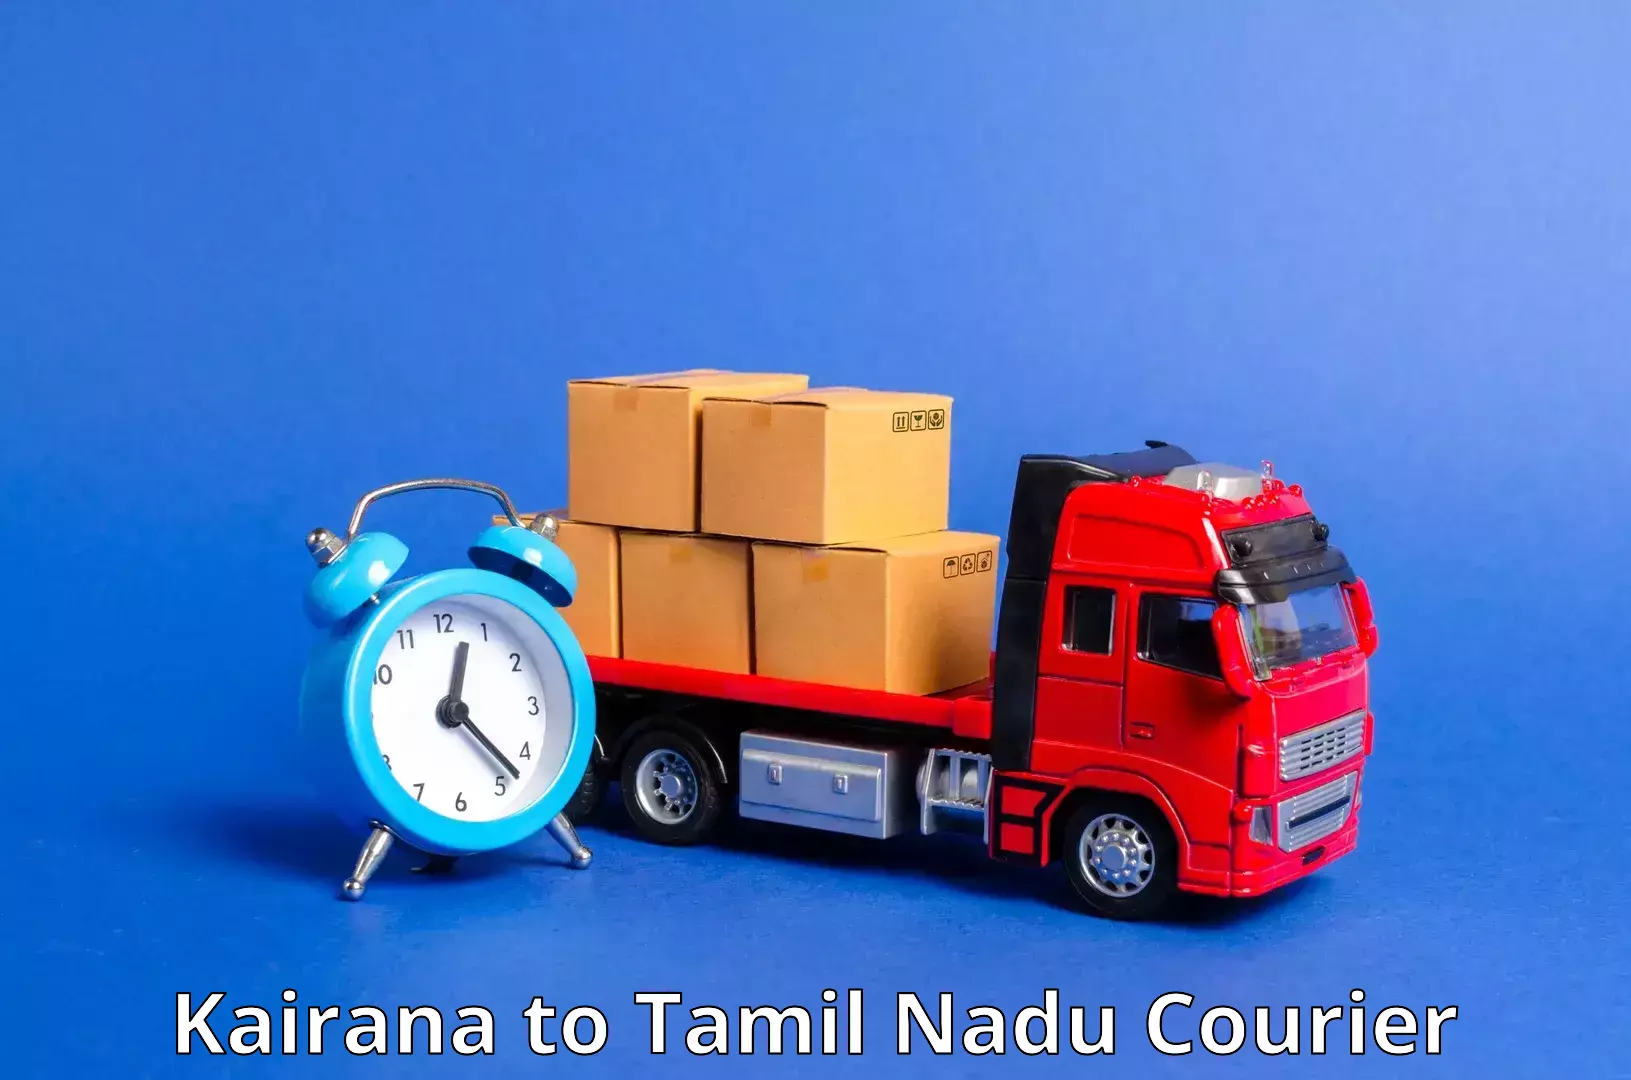 Courier service comparison Kairana to Madukkarai